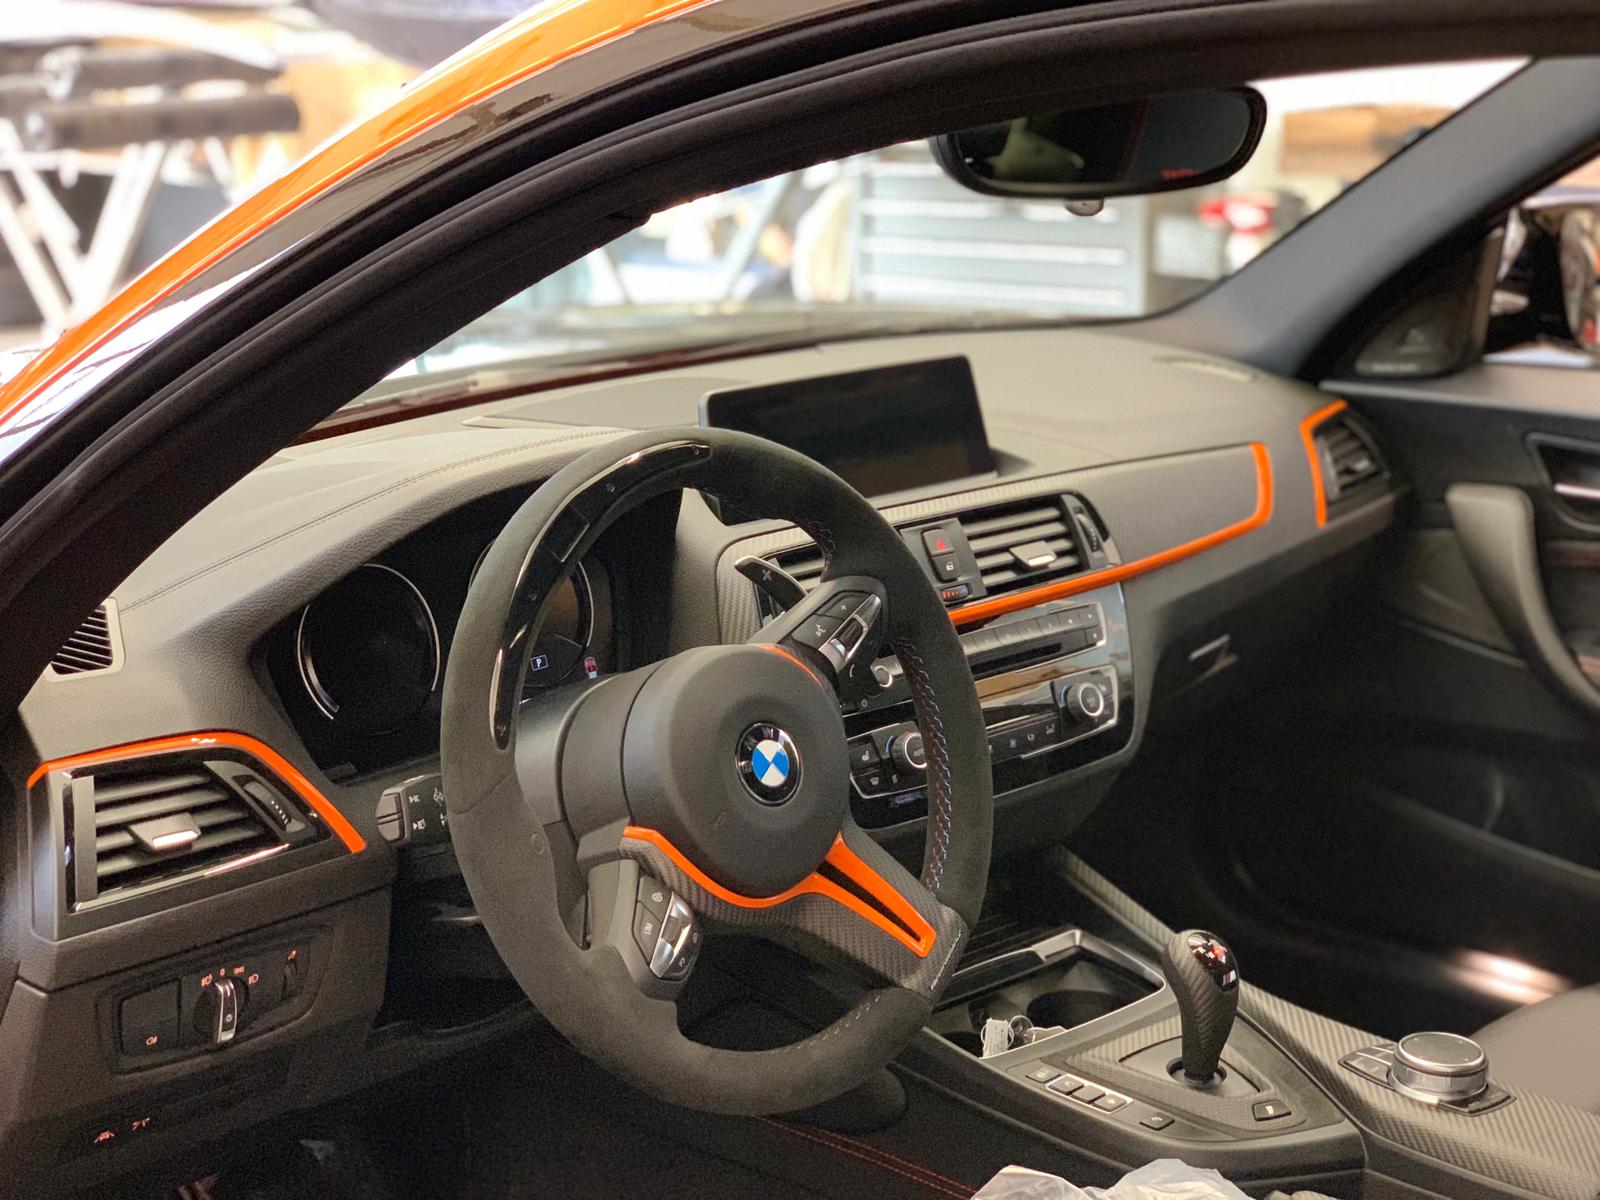 BMW M Performance Lenkrad mit Race Display 